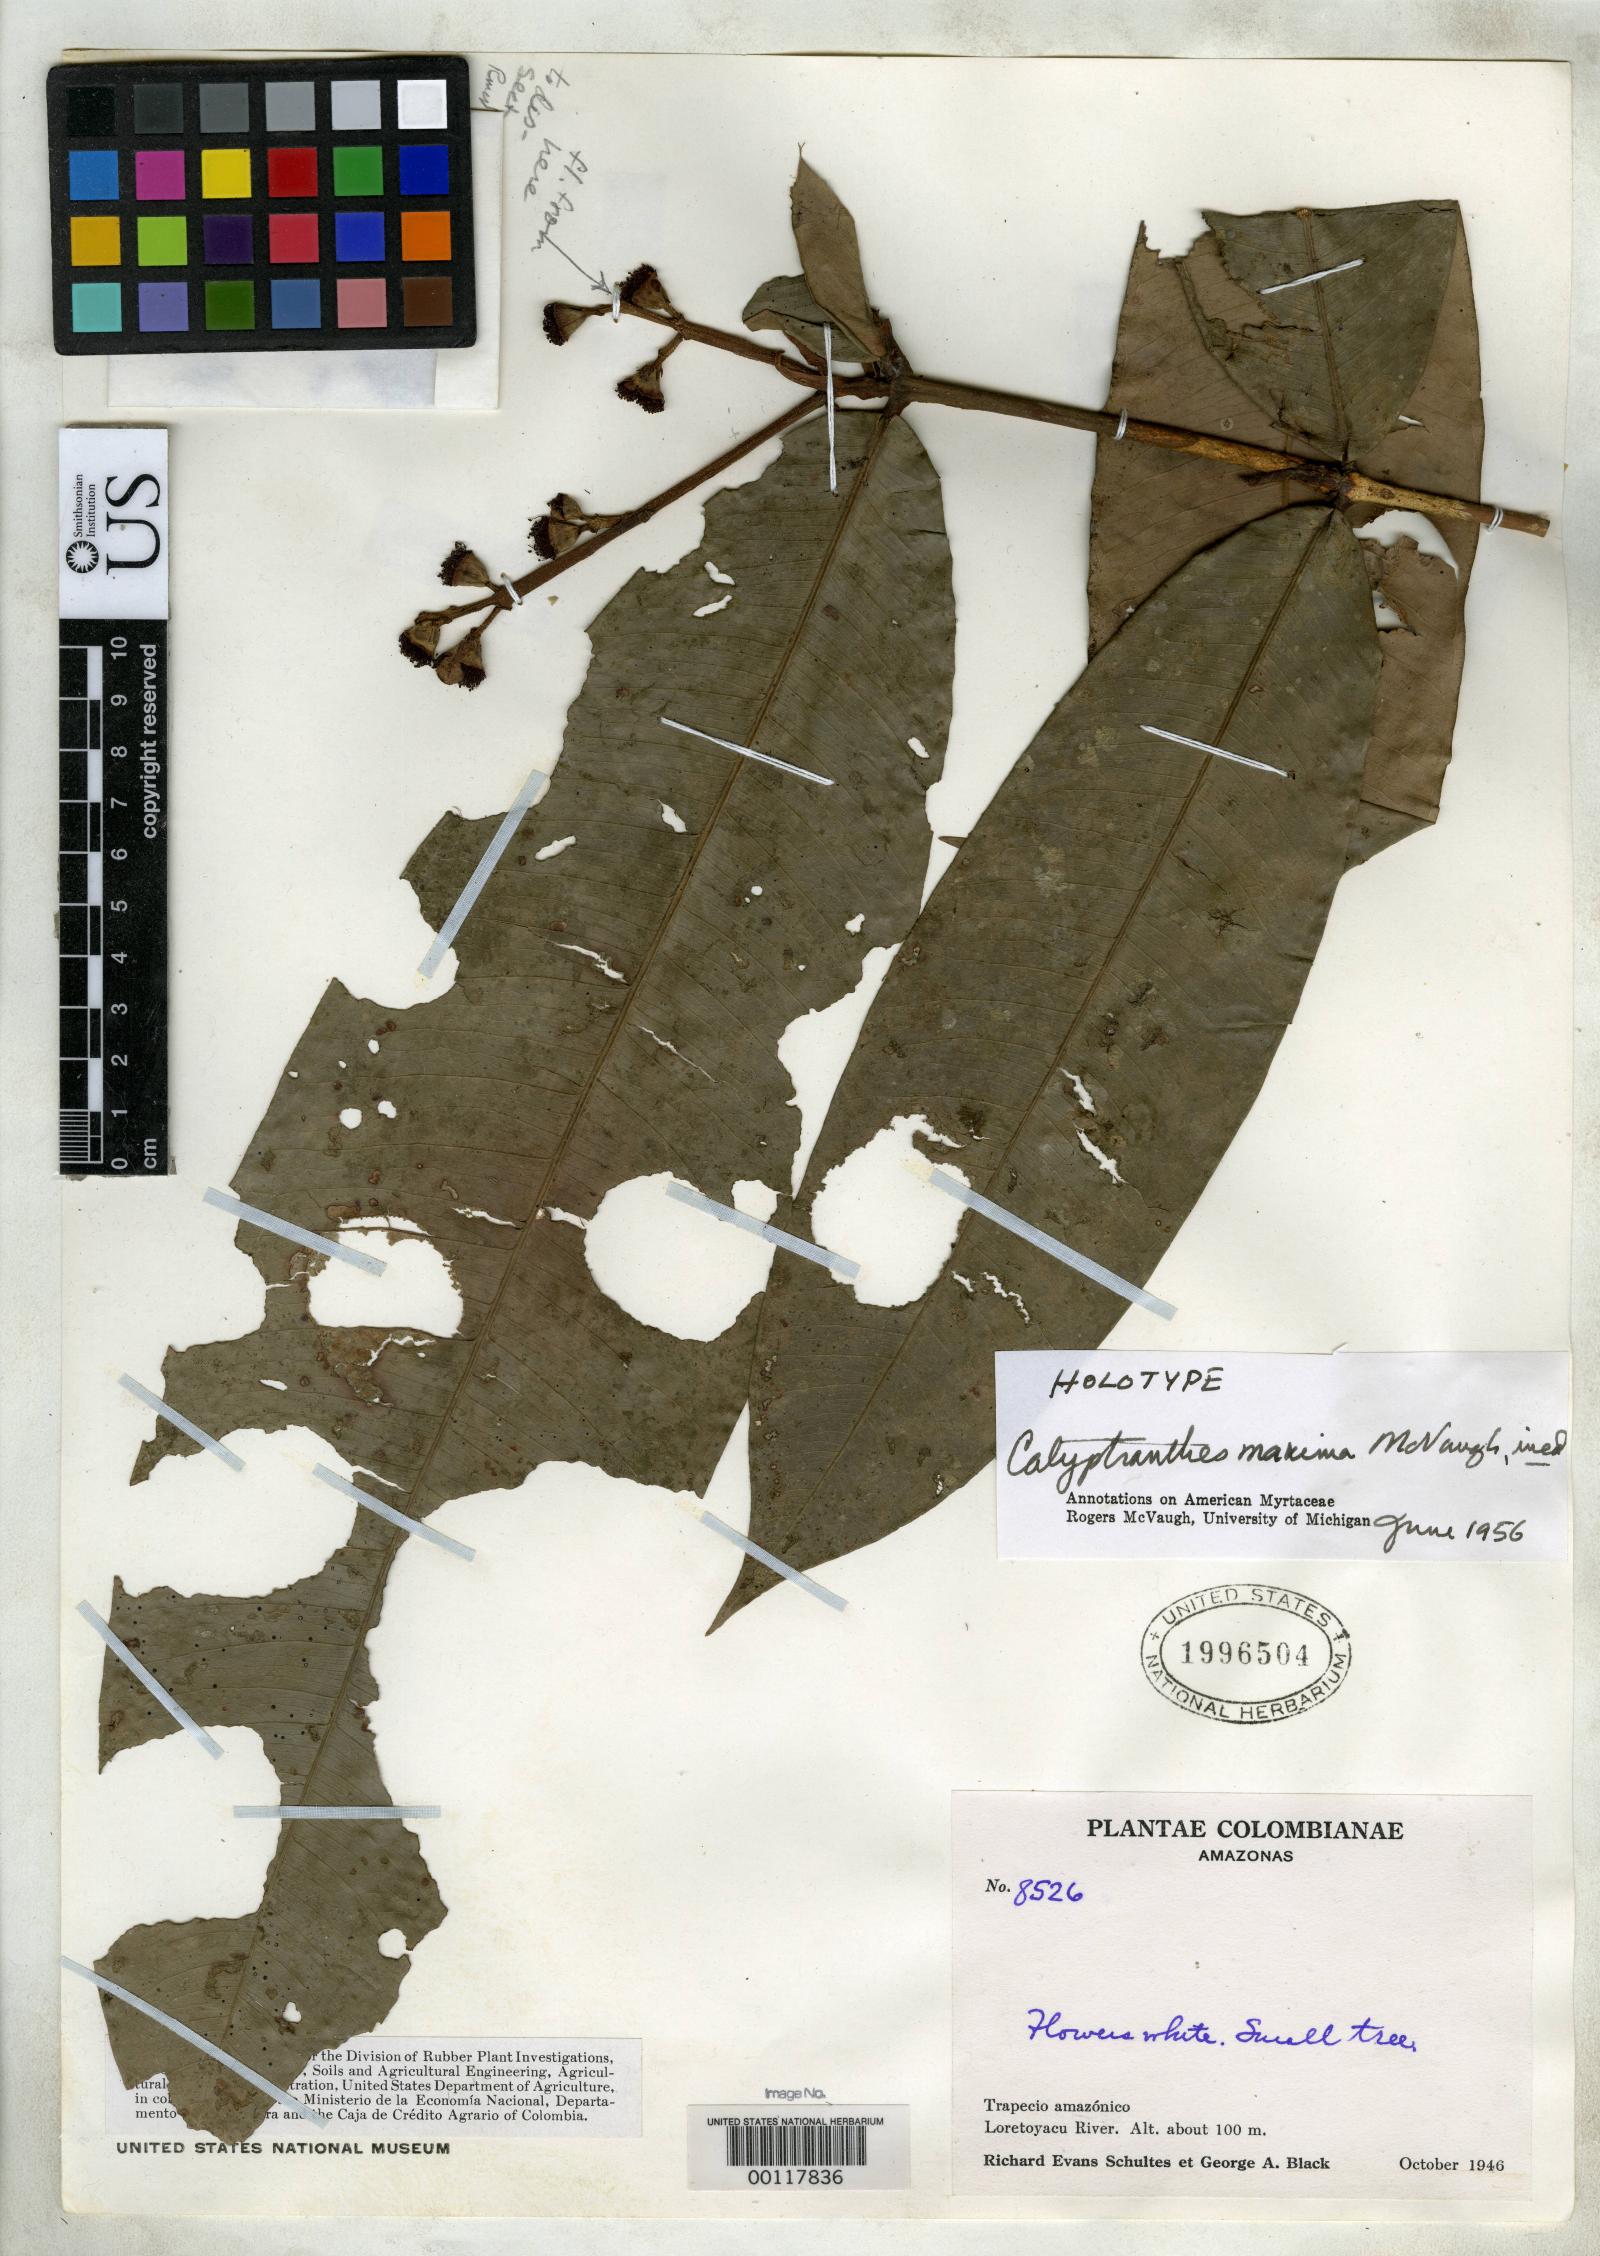 Calyptranthes maxima image